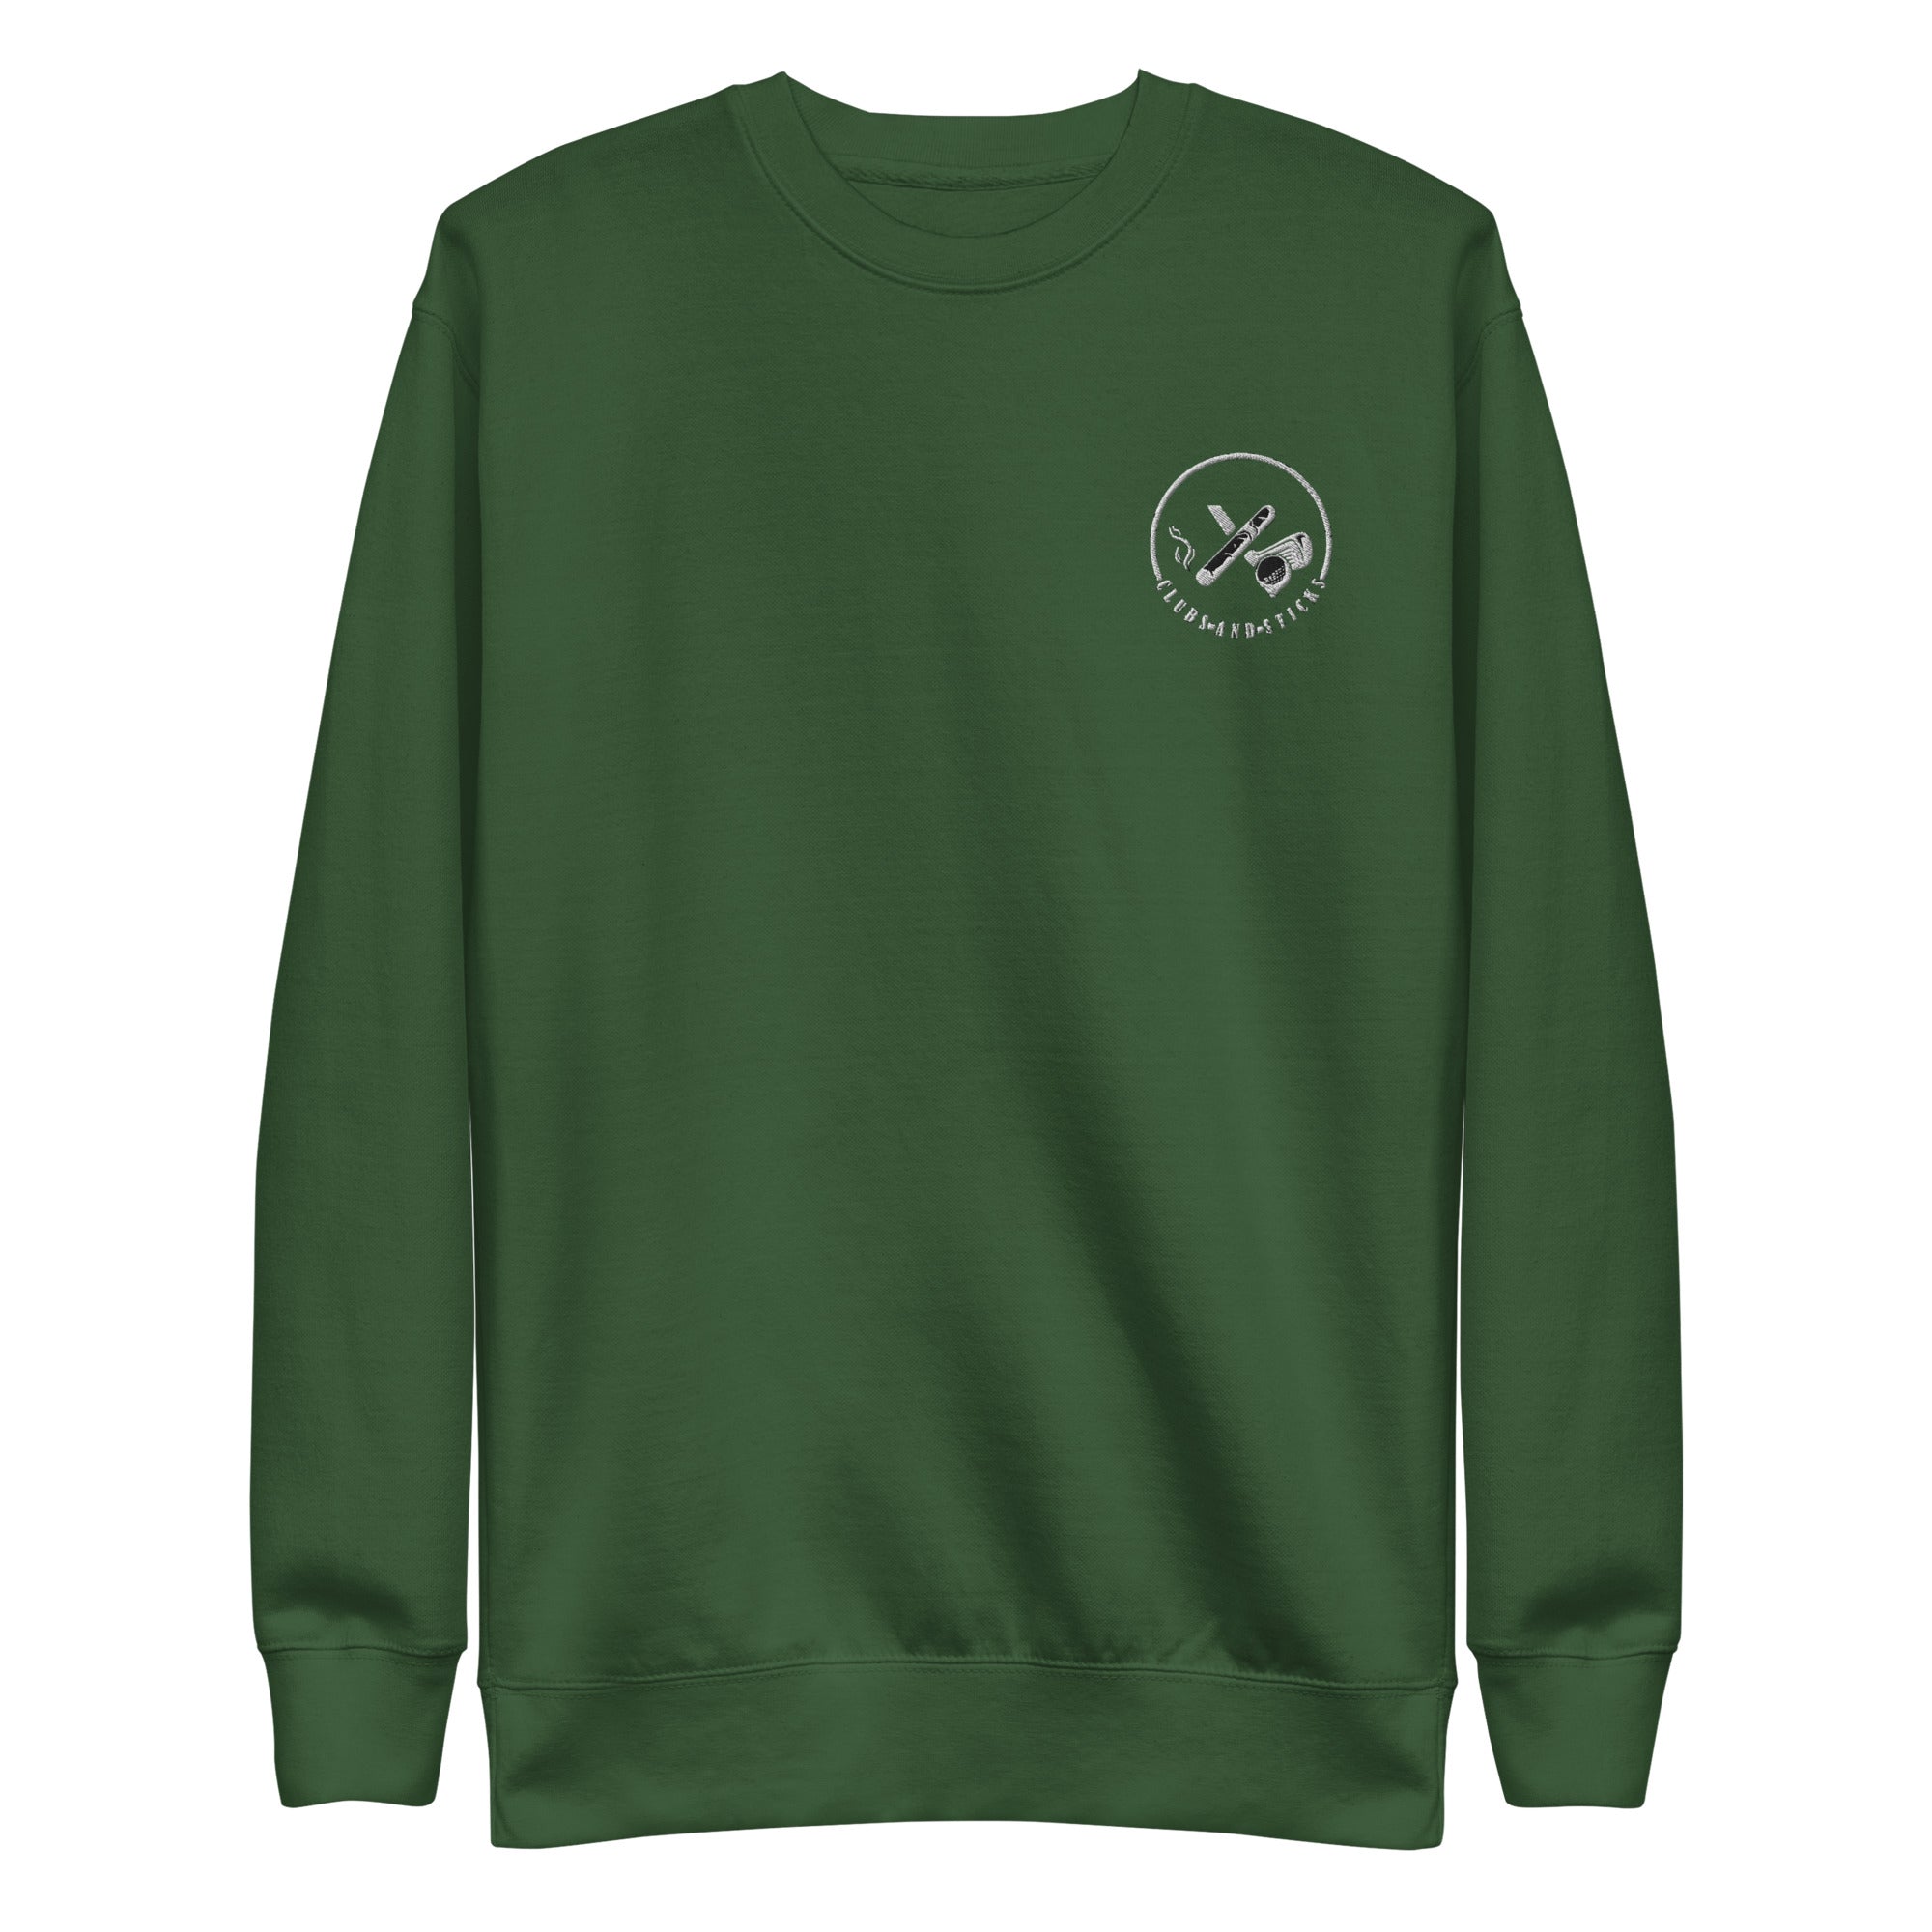 Clubs and Sticks Embroidered Premium Sweatshirt